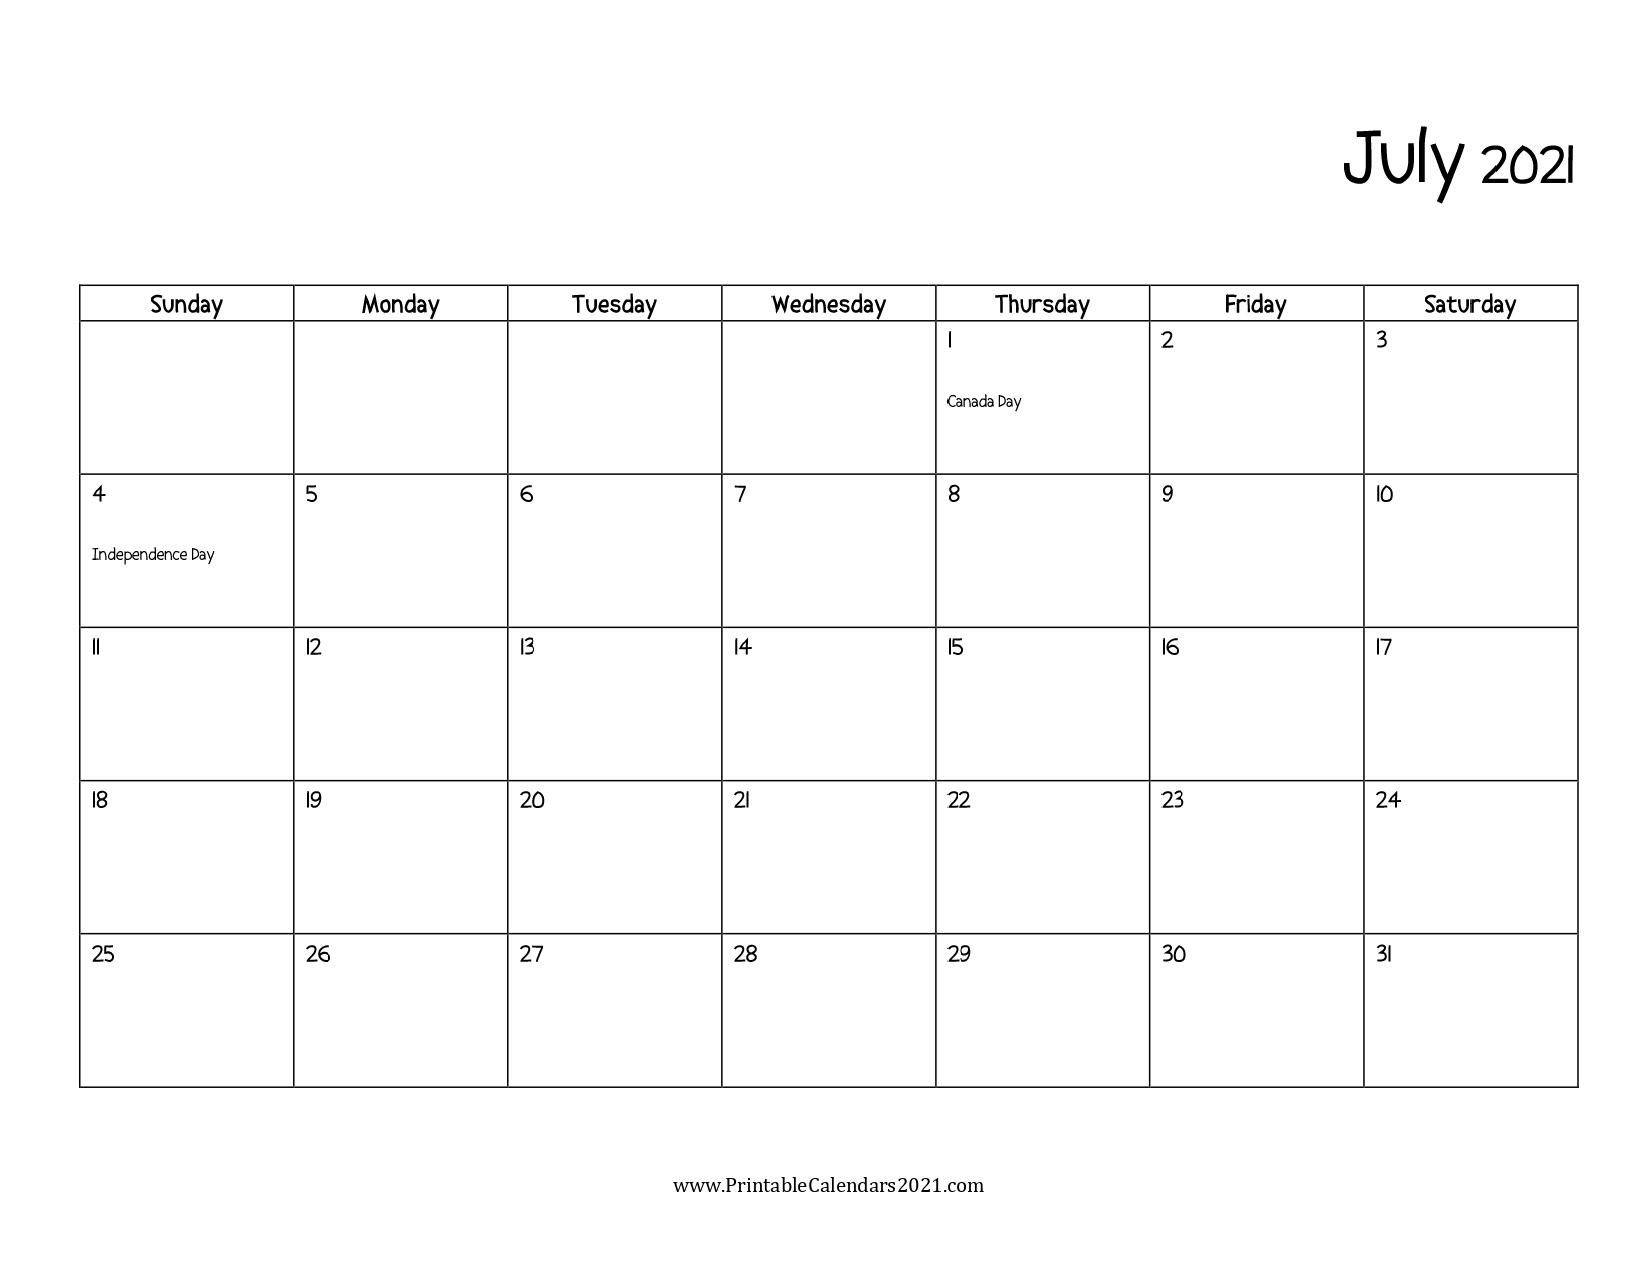 45+ July 2021 Calendar Printable, July 2021 Calendar Pdf, Blank, Free July 2021 Calendar Pdf Download